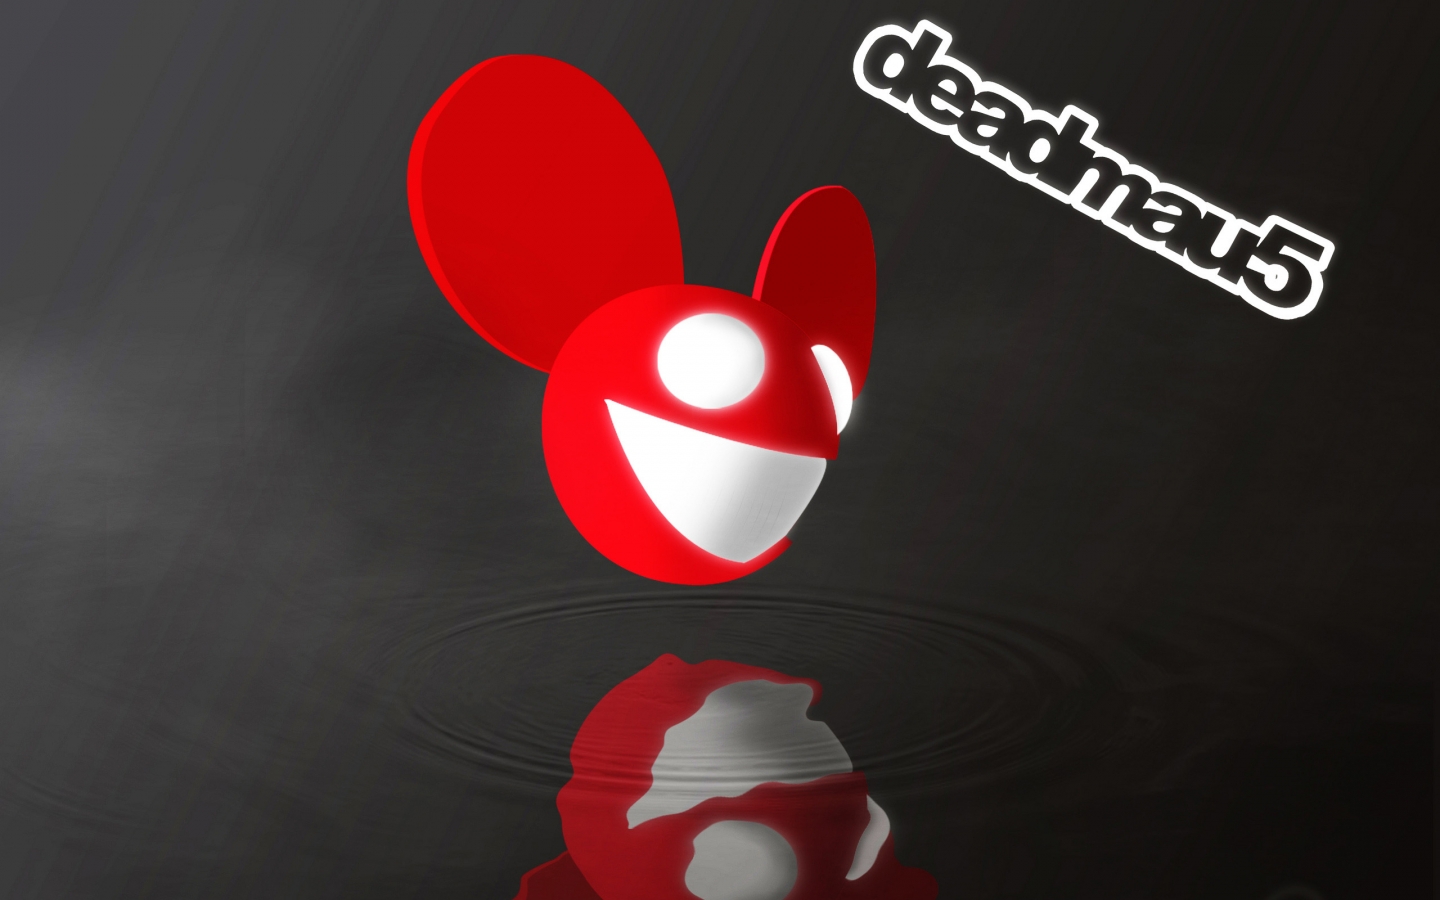 Deadmau5 Mascot for 1440 x 900 widescreen resolution